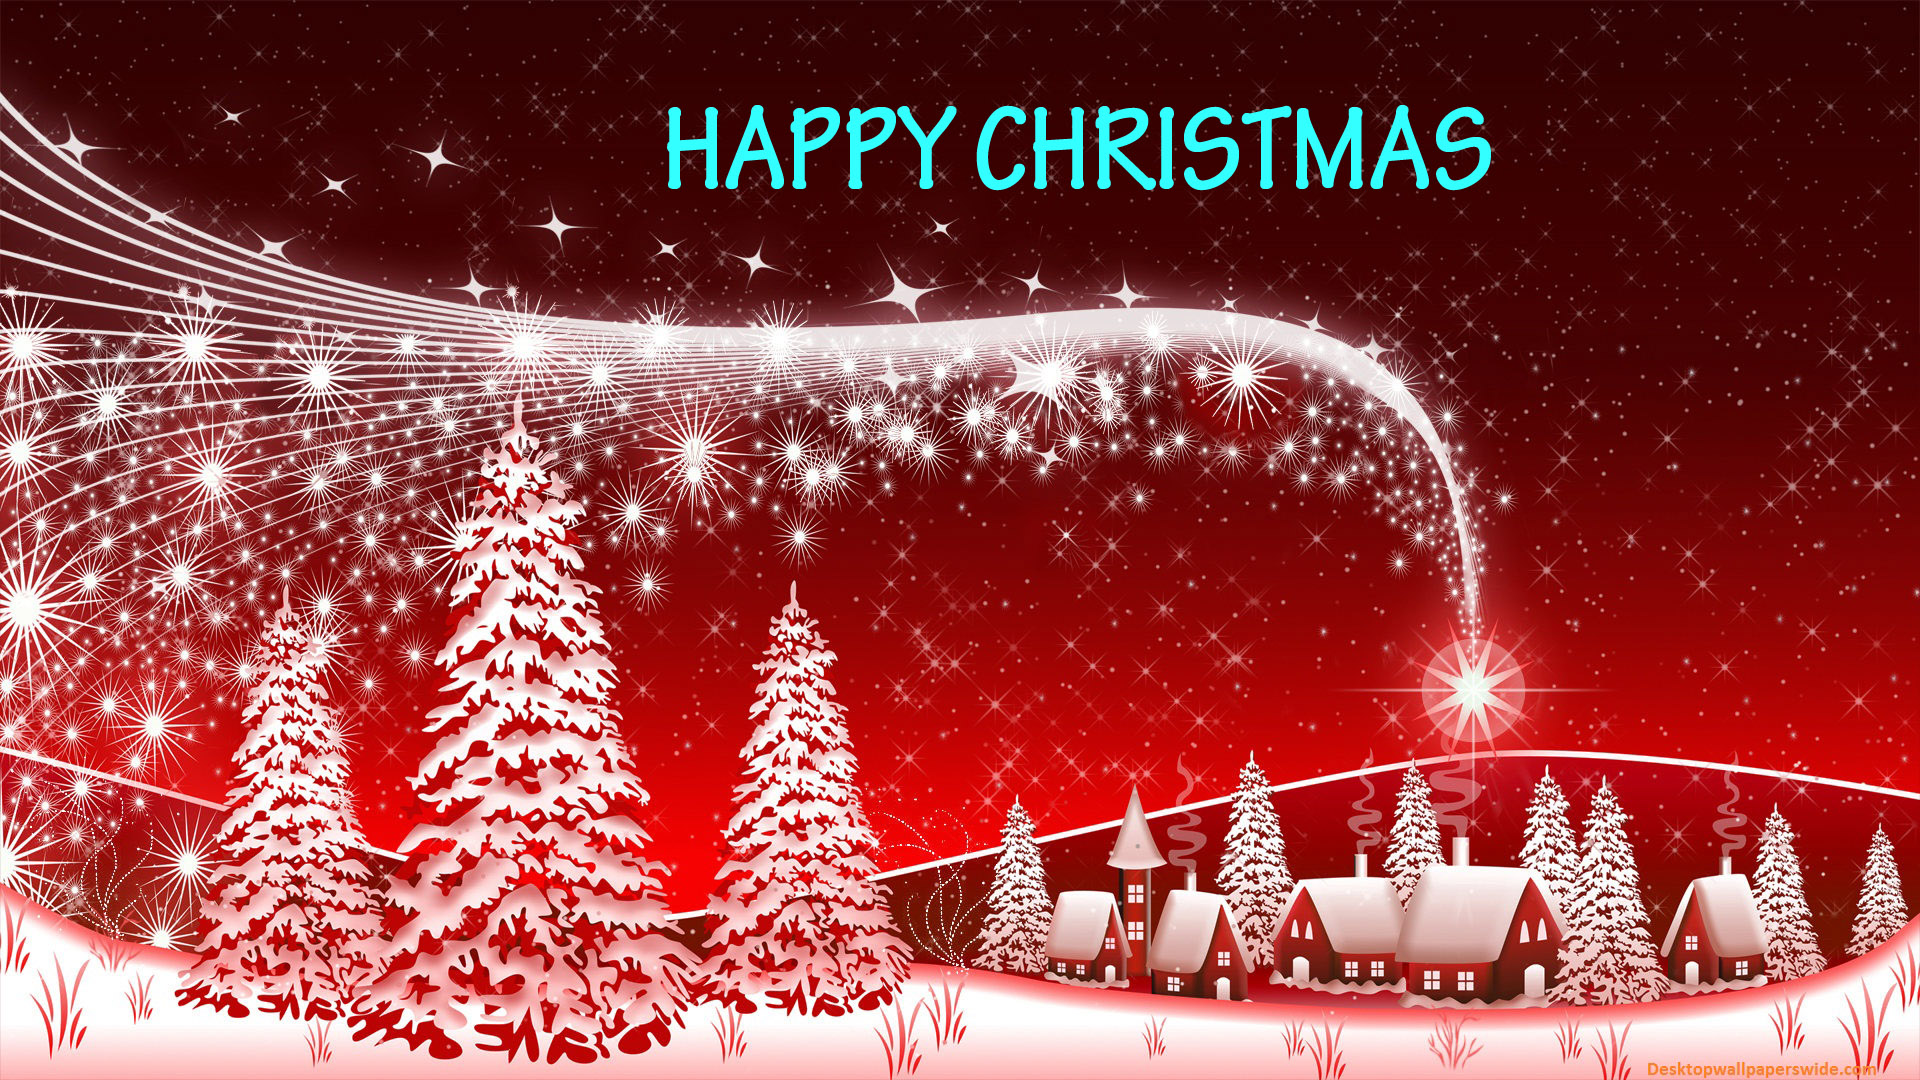 Happy Merry Christmas Images Downloads hdwallpaperdesigncom